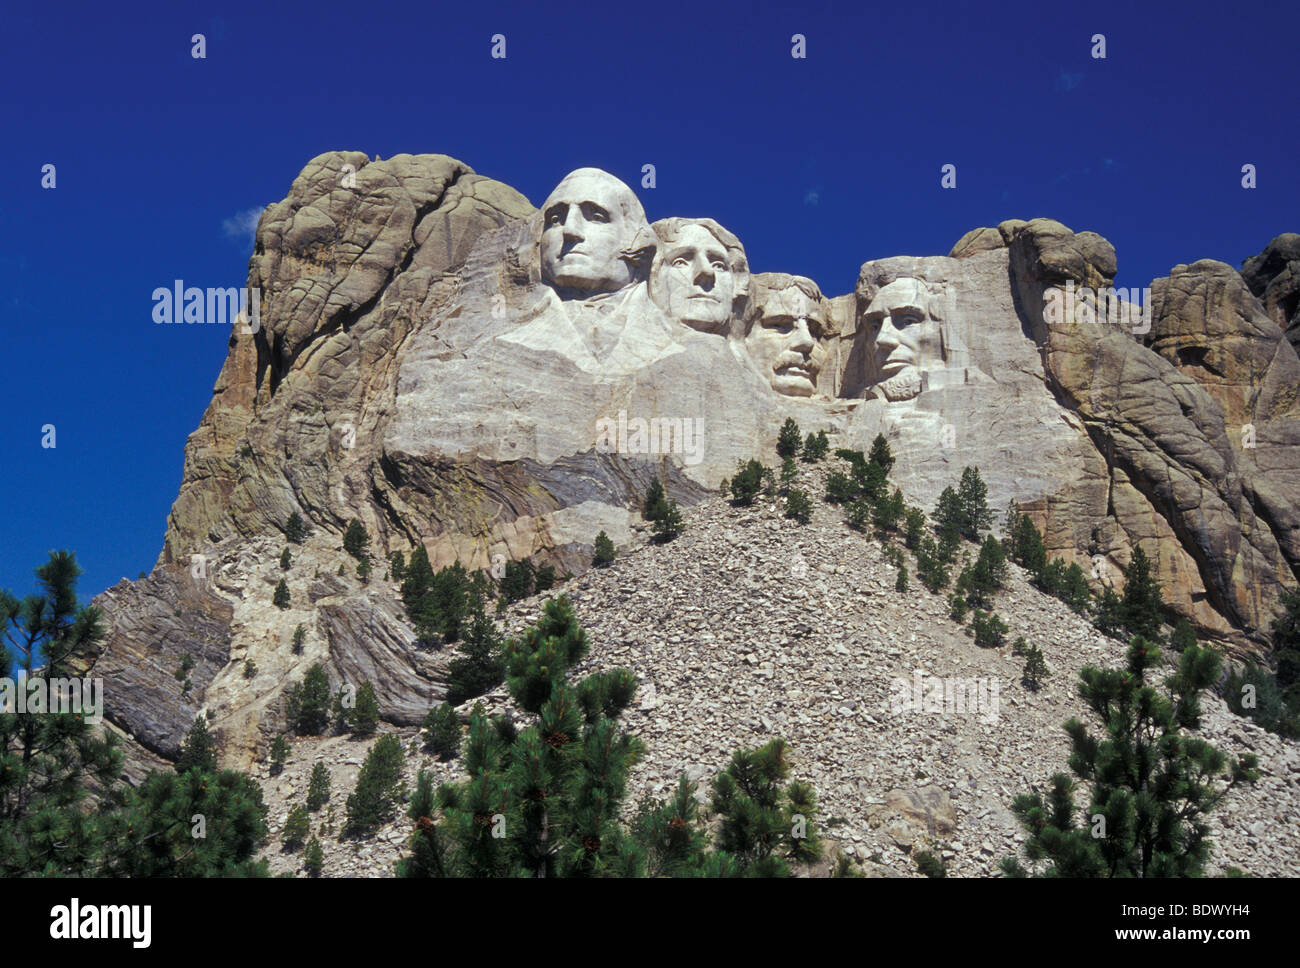 Mount Rushmore National Memorial, South Dakota, USA Stock Photo